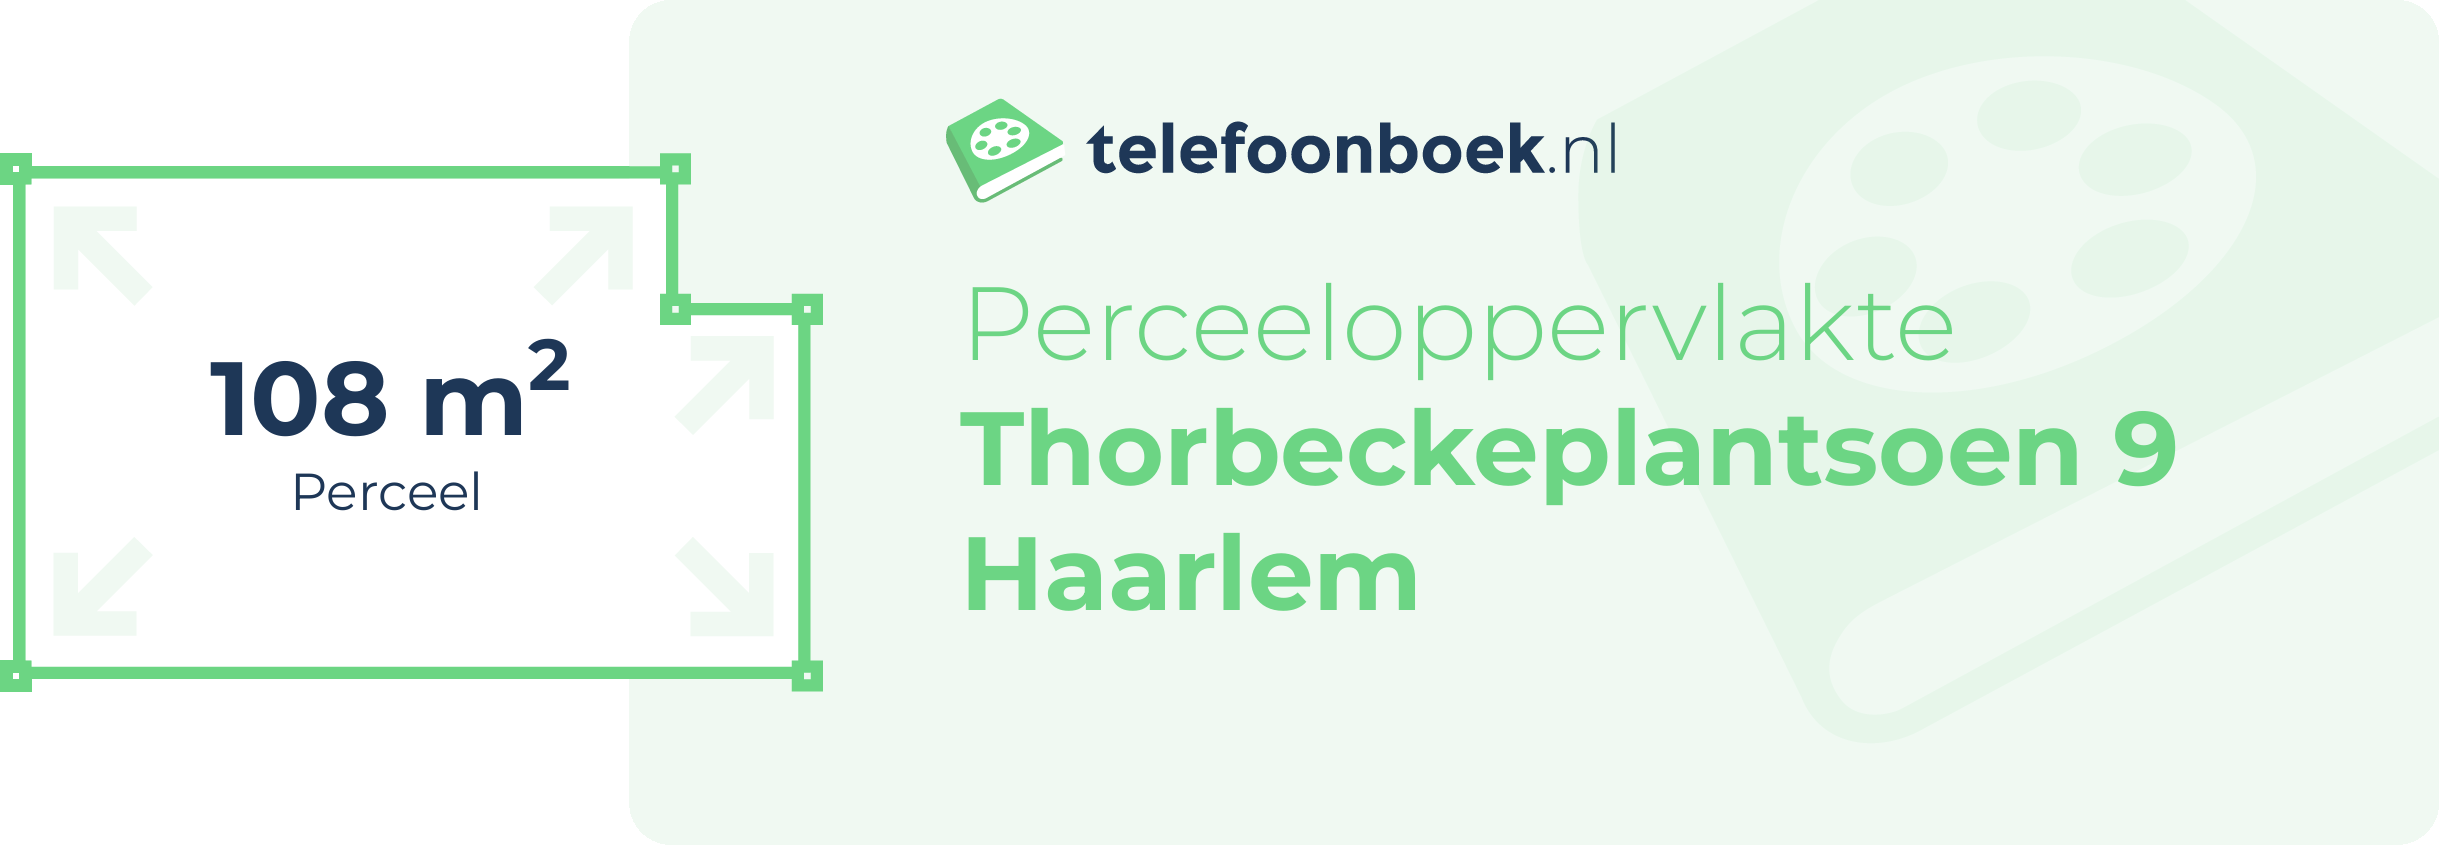 Perceeloppervlakte Thorbeckeplantsoen 9 Haarlem